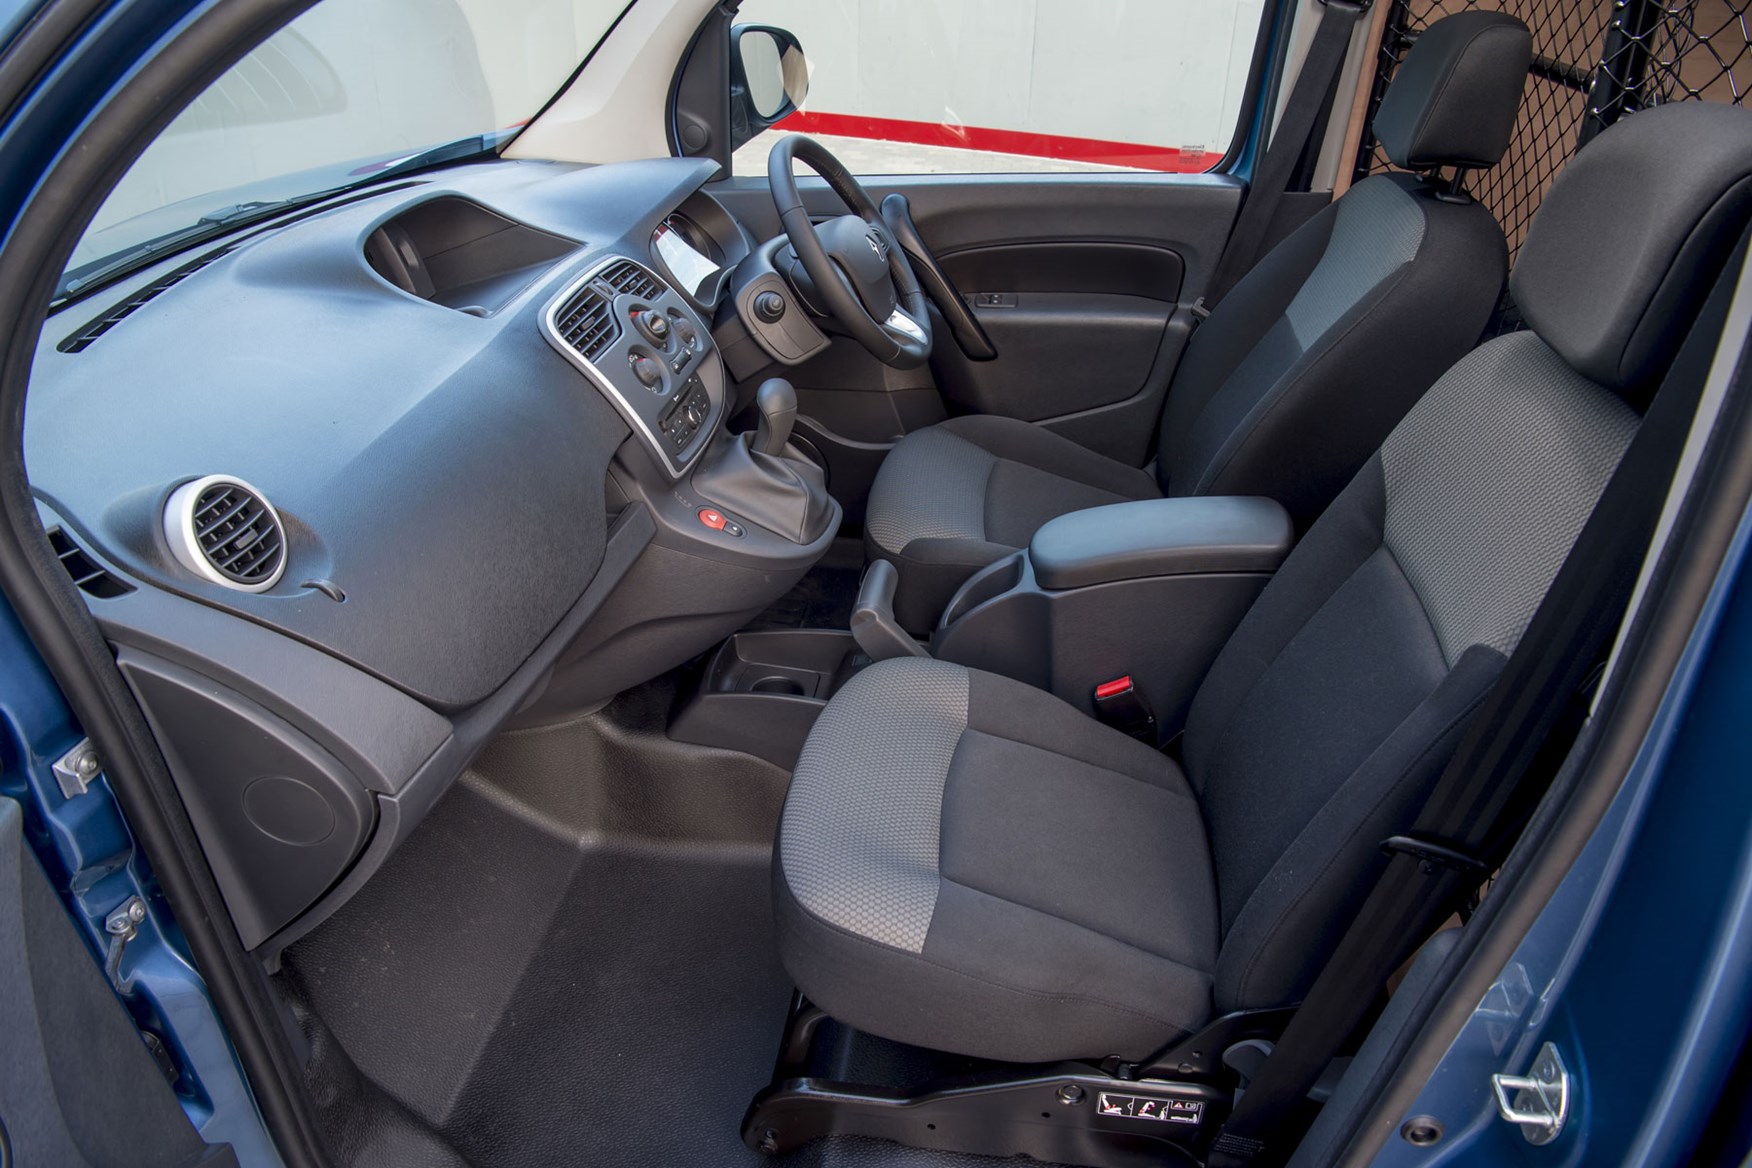 Renault Kangoo ZE review 2020 - cab interior, passenger's side